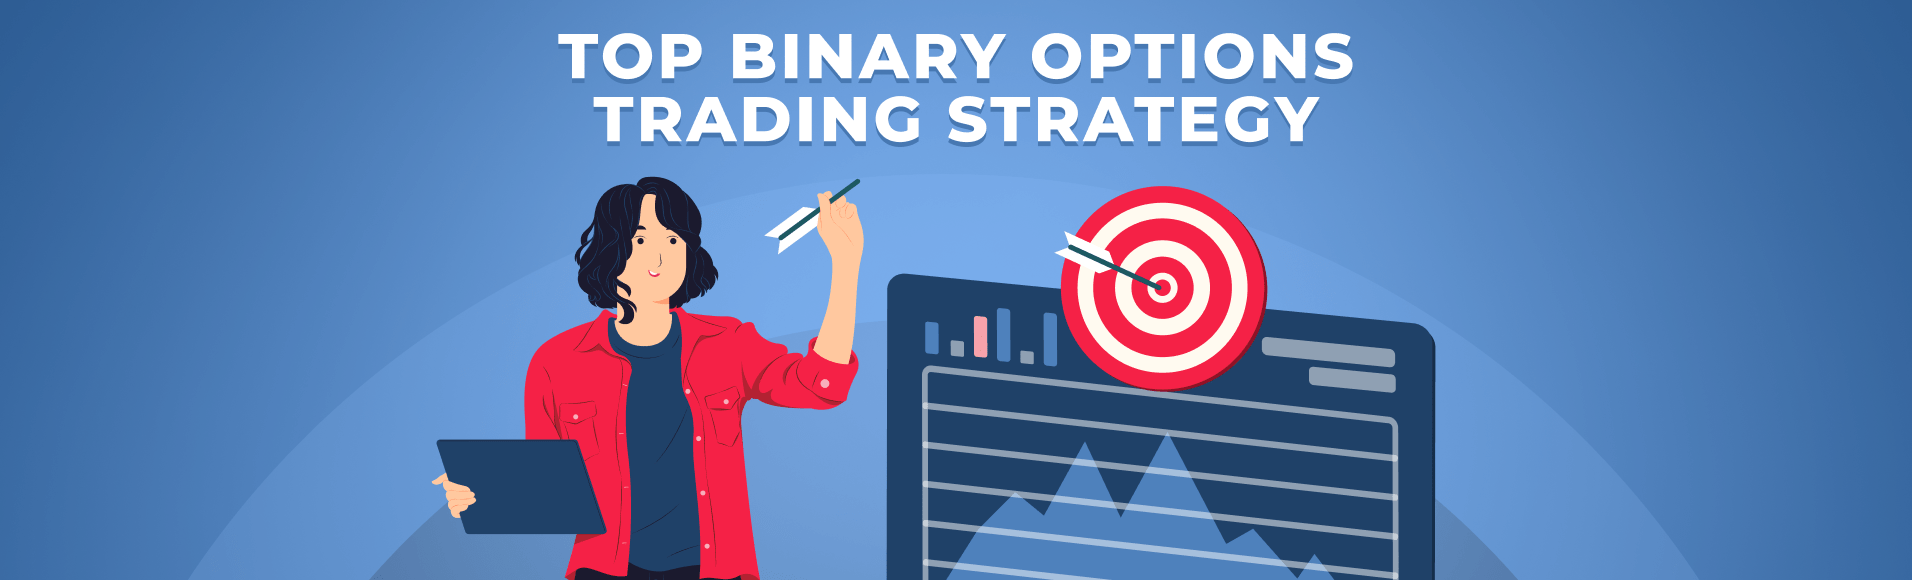 TOP Stratégie de trading options binaires